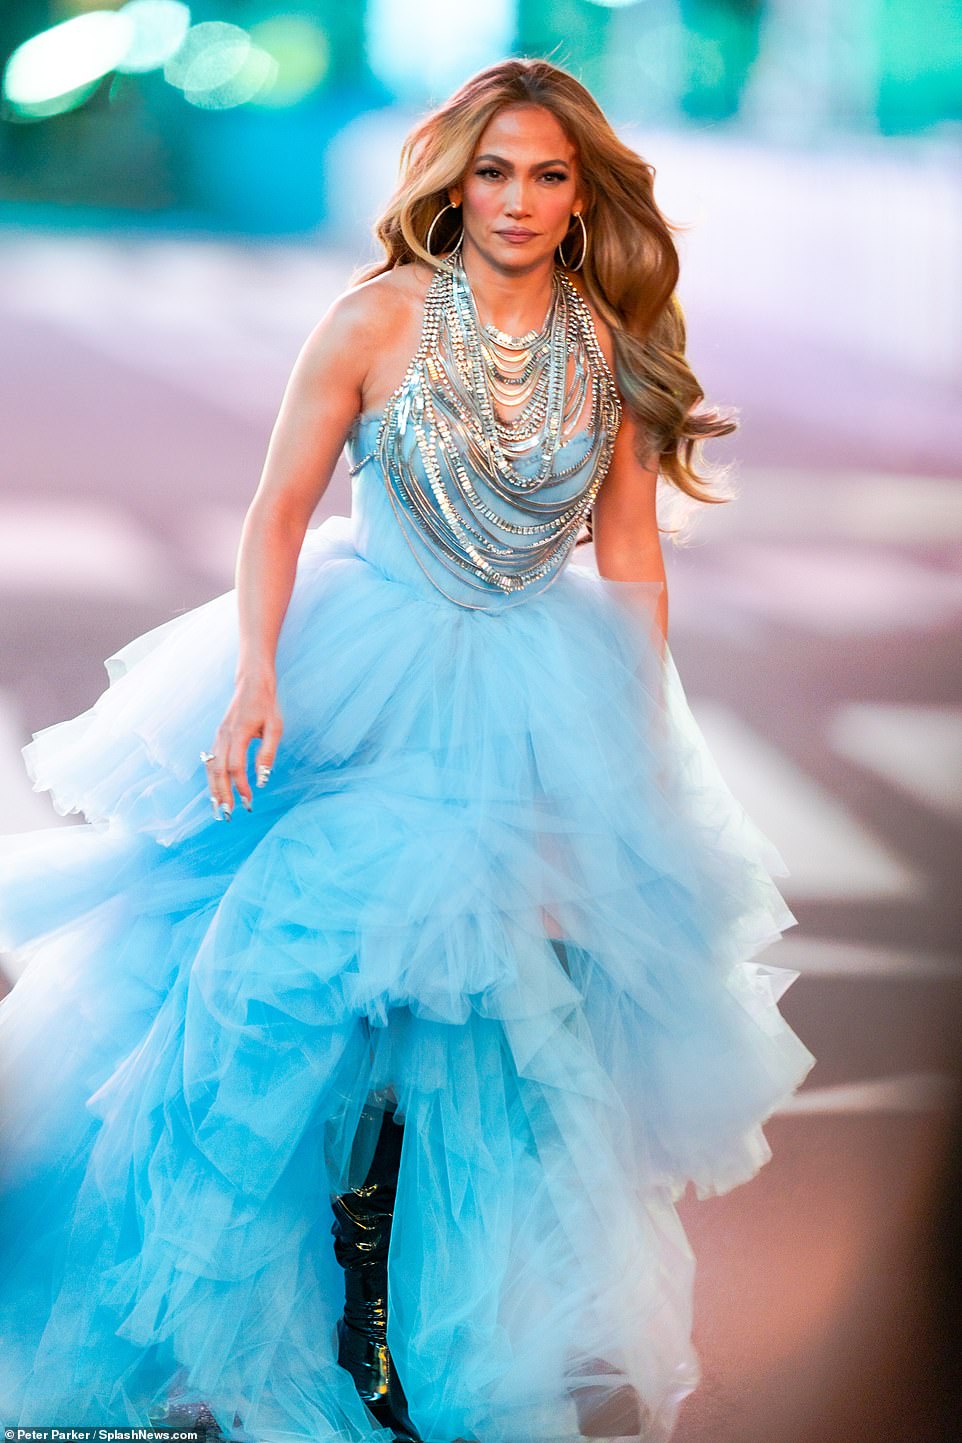 Jennifer Lopez dresses up like a Disney princess as she takes over Times Square ahead of NYE